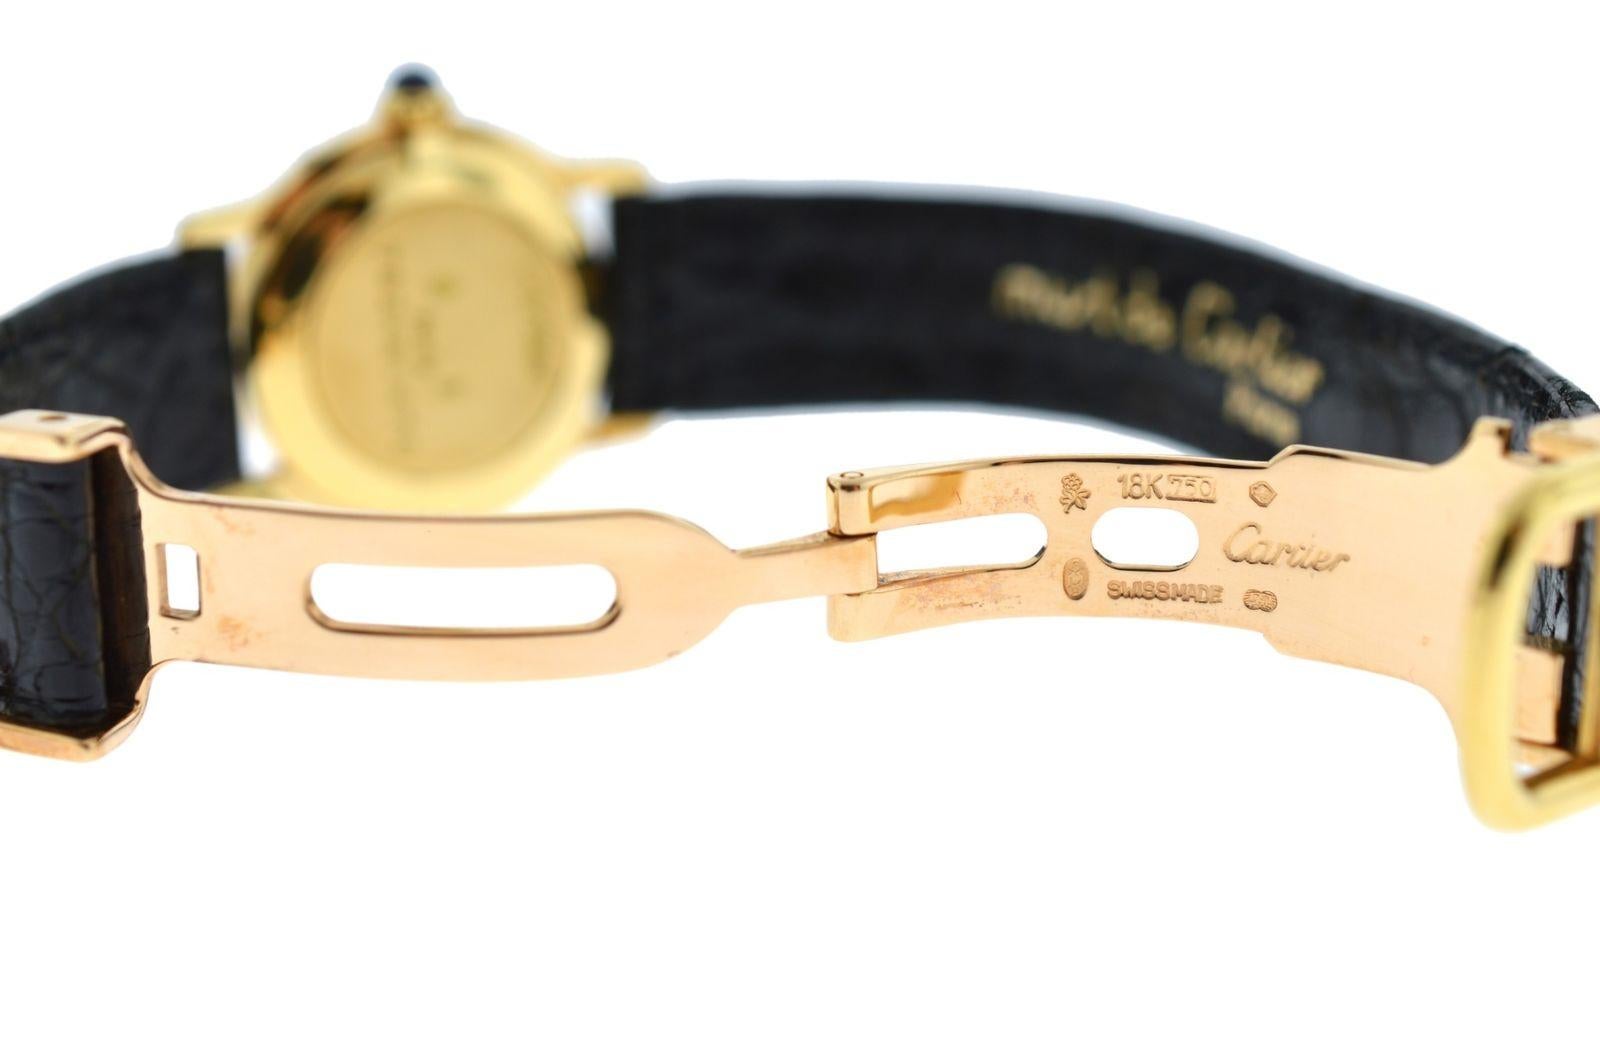 Ladies Cartier Paris Ronde 18 Karat Gold Diamond Mechanical Watch 4